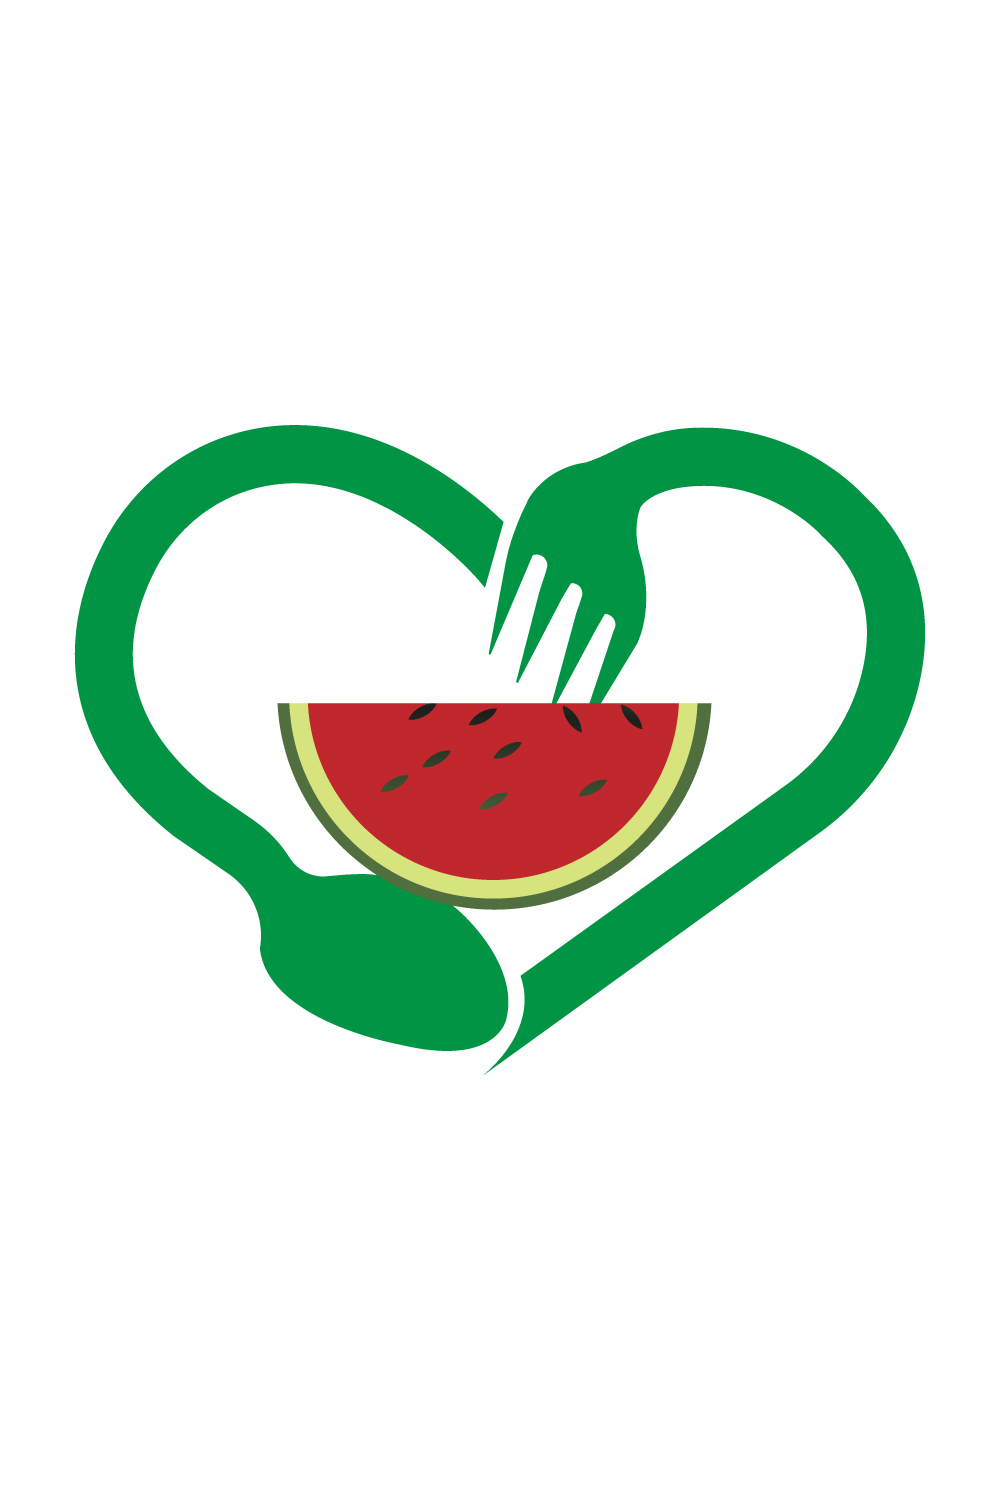 Premium vector Watermelon logo design vector images Palestine food logo design vector illustration pinterest preview image.